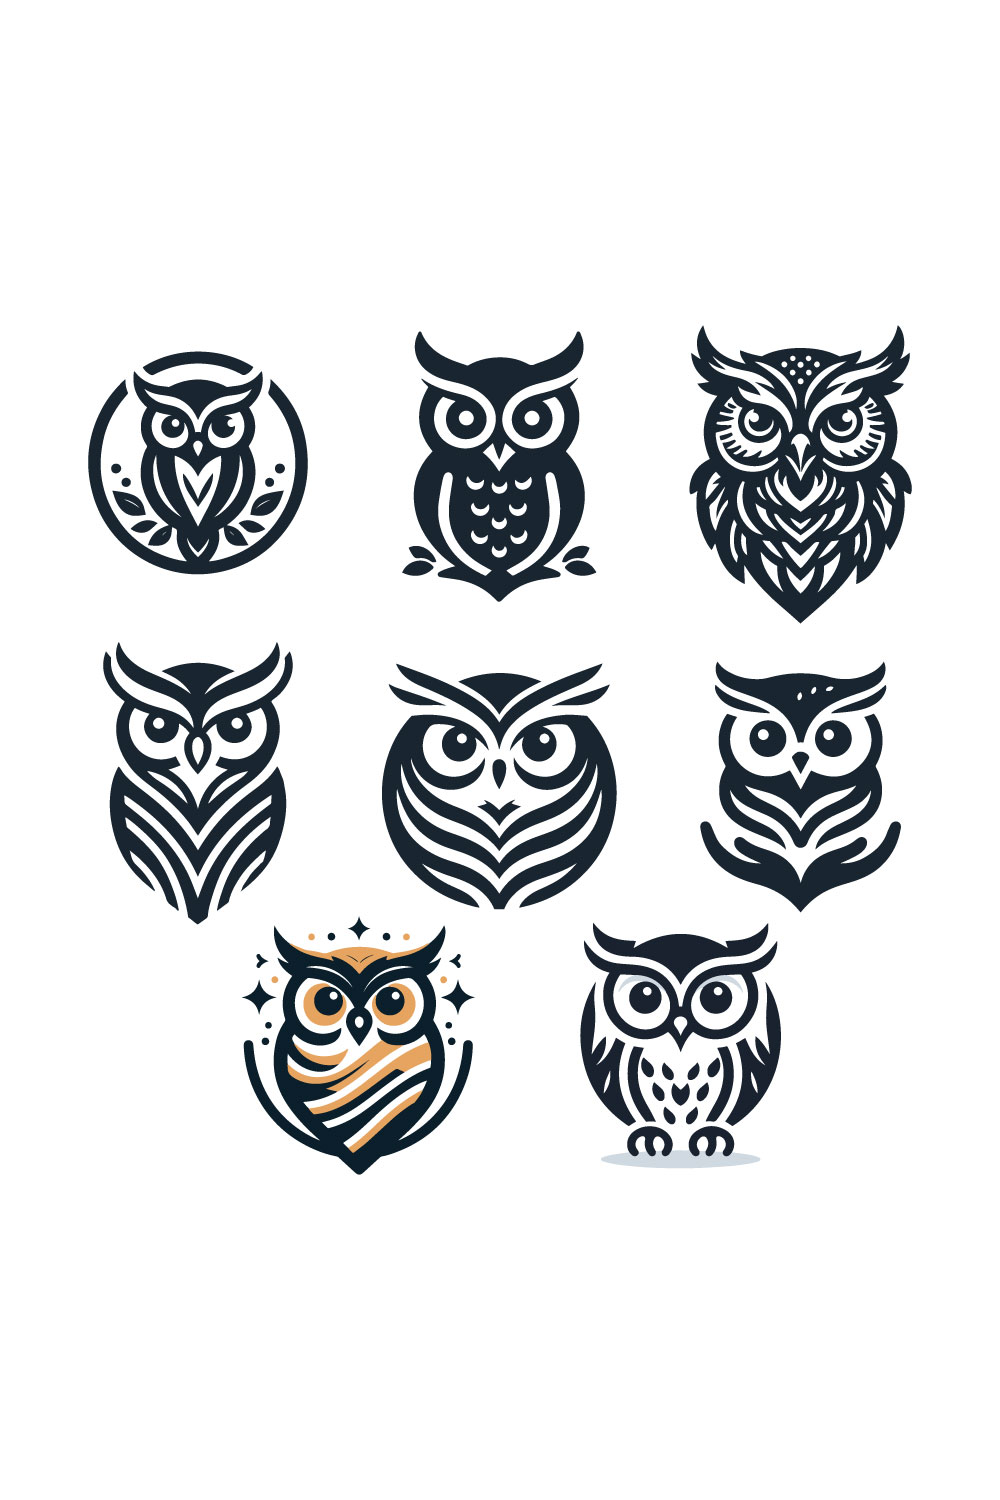 8 Owl Logos Vector Illustration pinterest preview image.